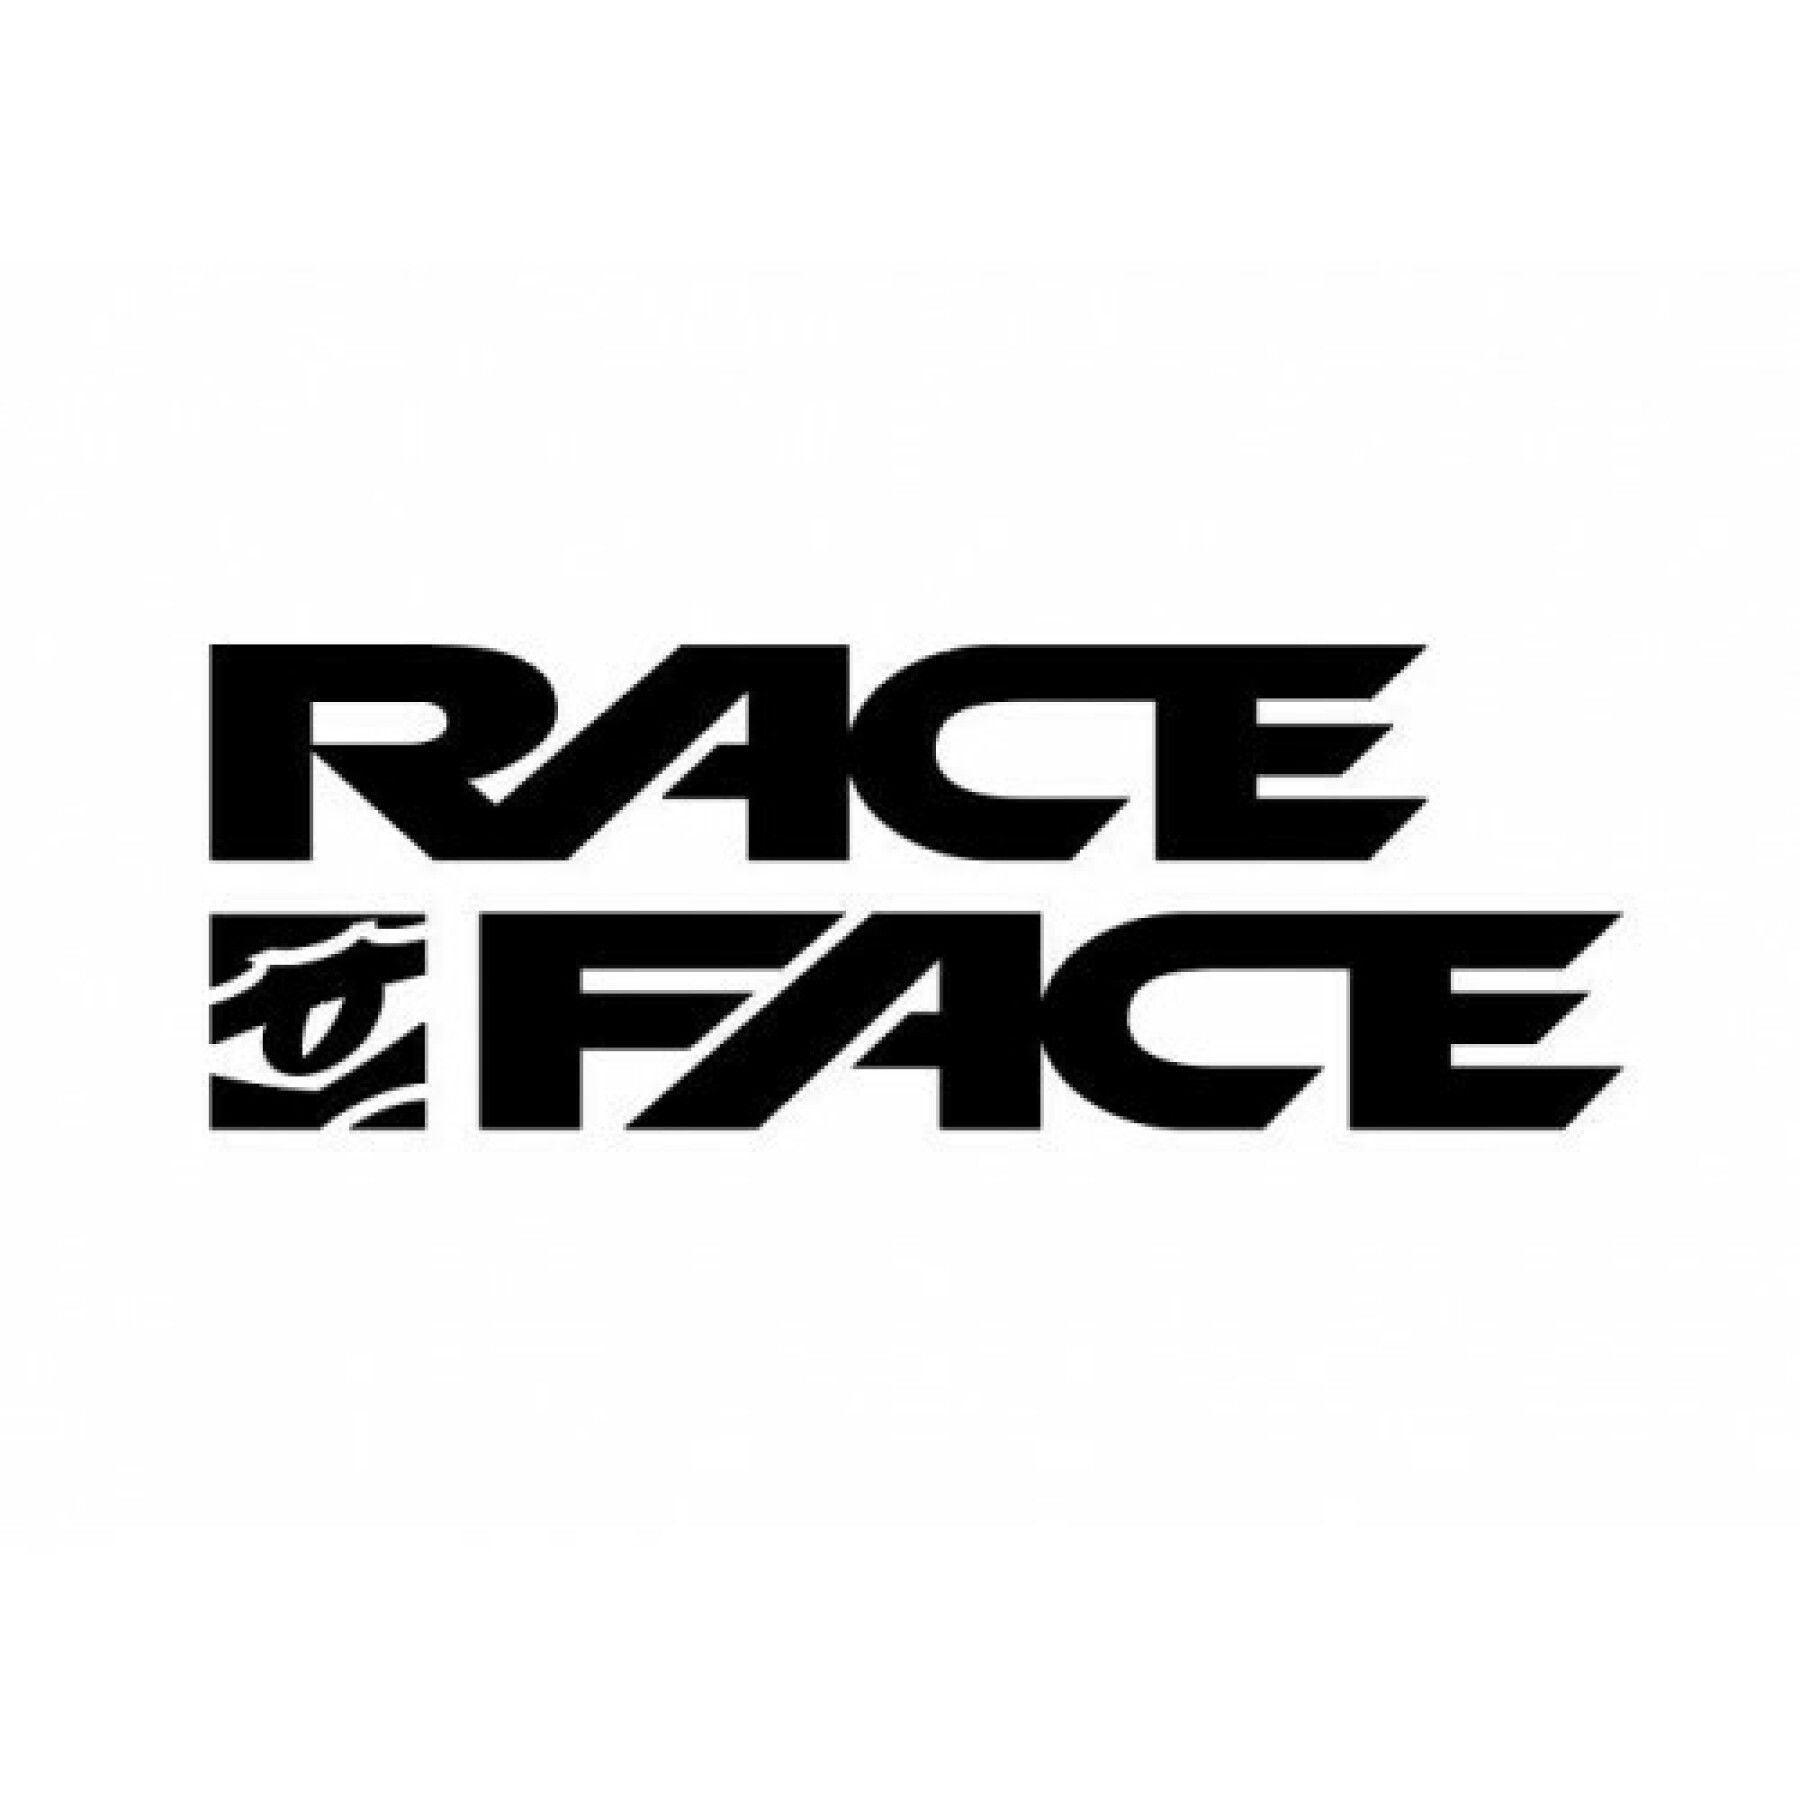 Llanta Race Face arc offset - 30 - 27.5 - 32t